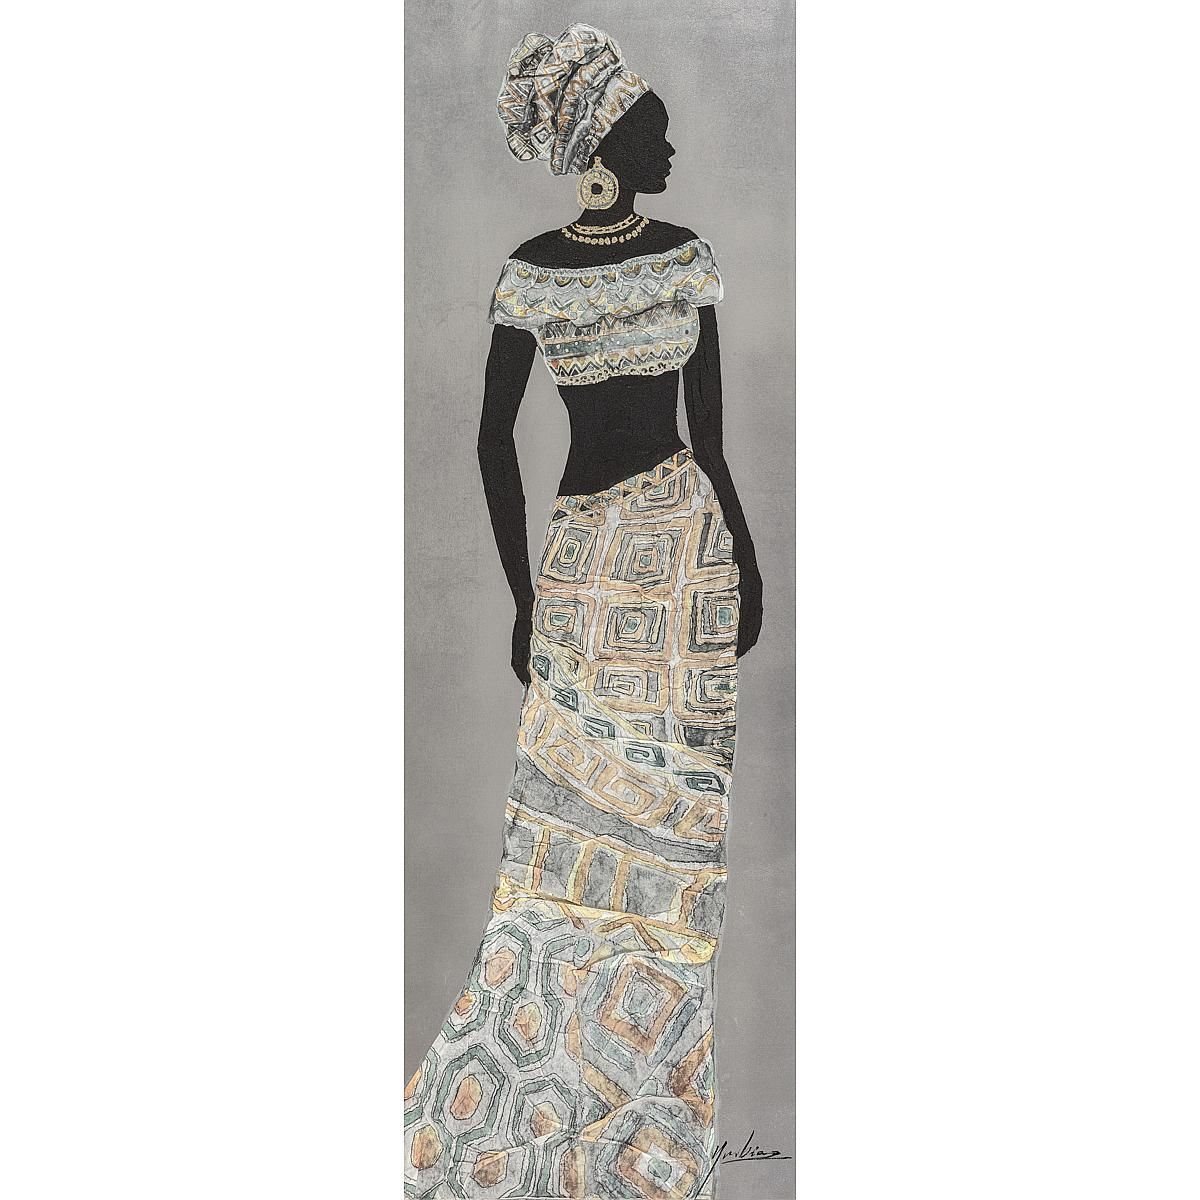 ARTELIBRE  Πίνακας "Γυναικεία Φιγούρα" Καμβάς 40x120cm